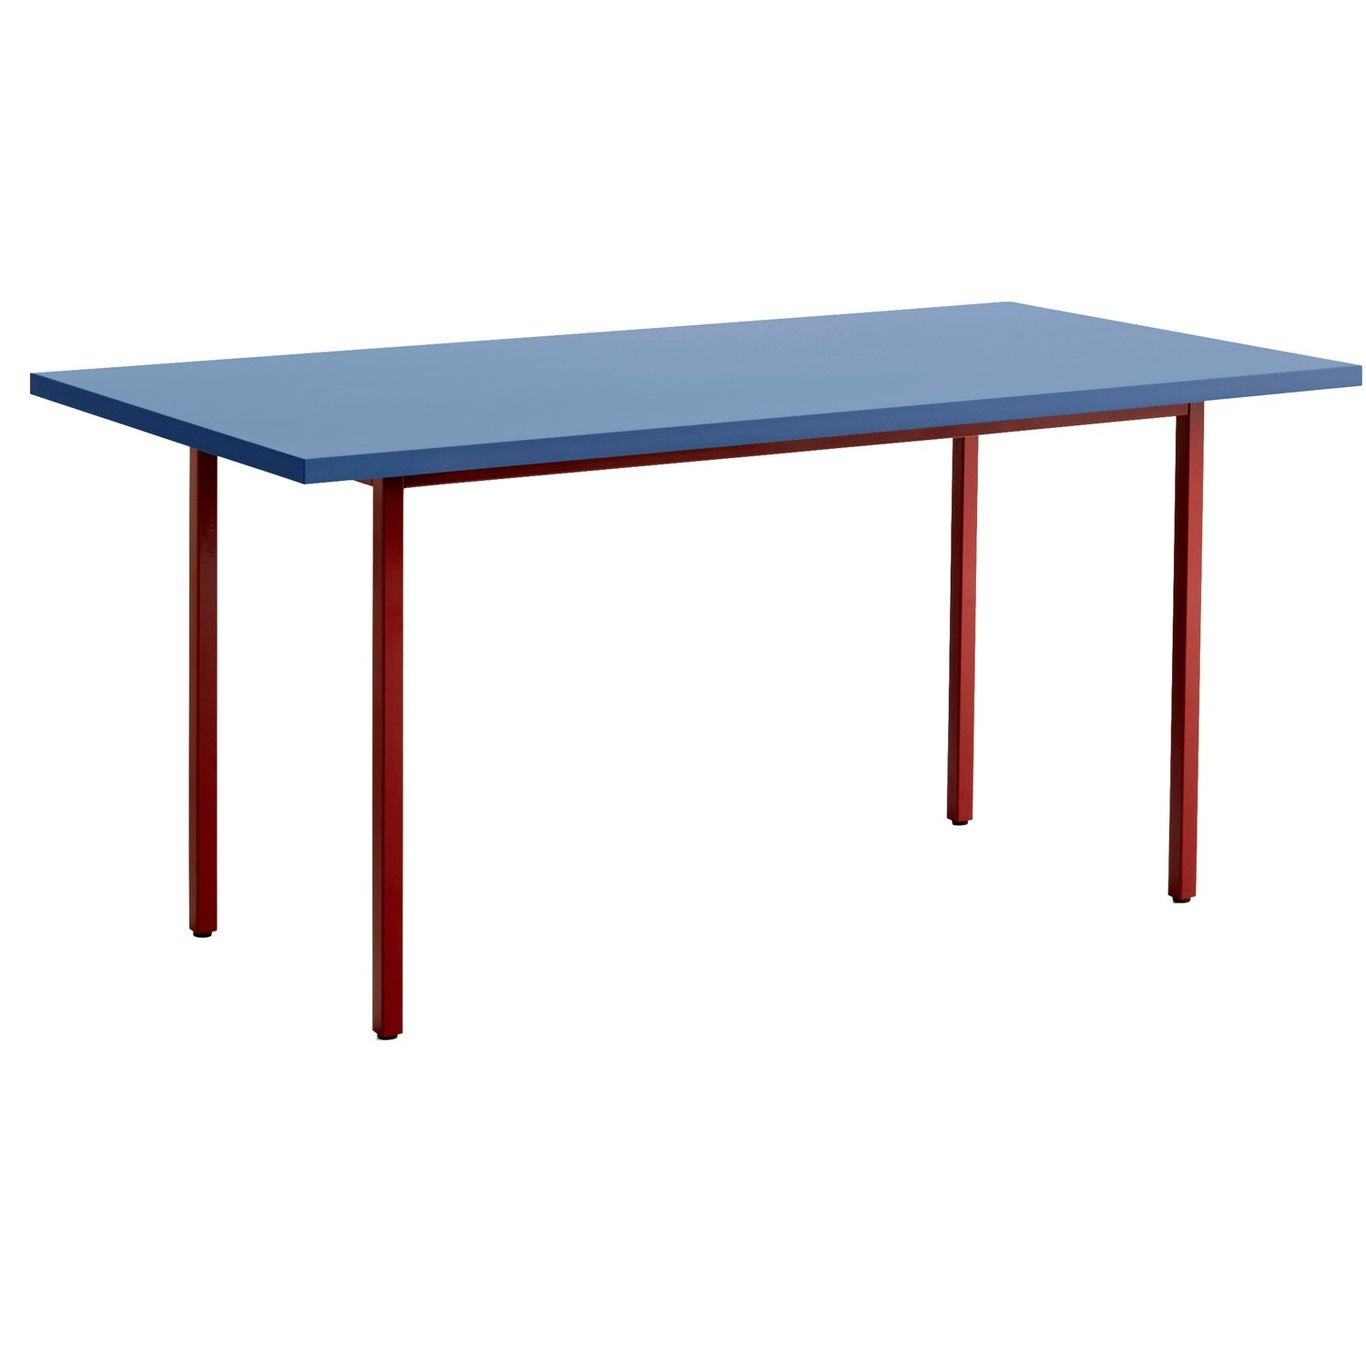 Two-Colour Tisch 160x82 cm, Weinrot / Blau